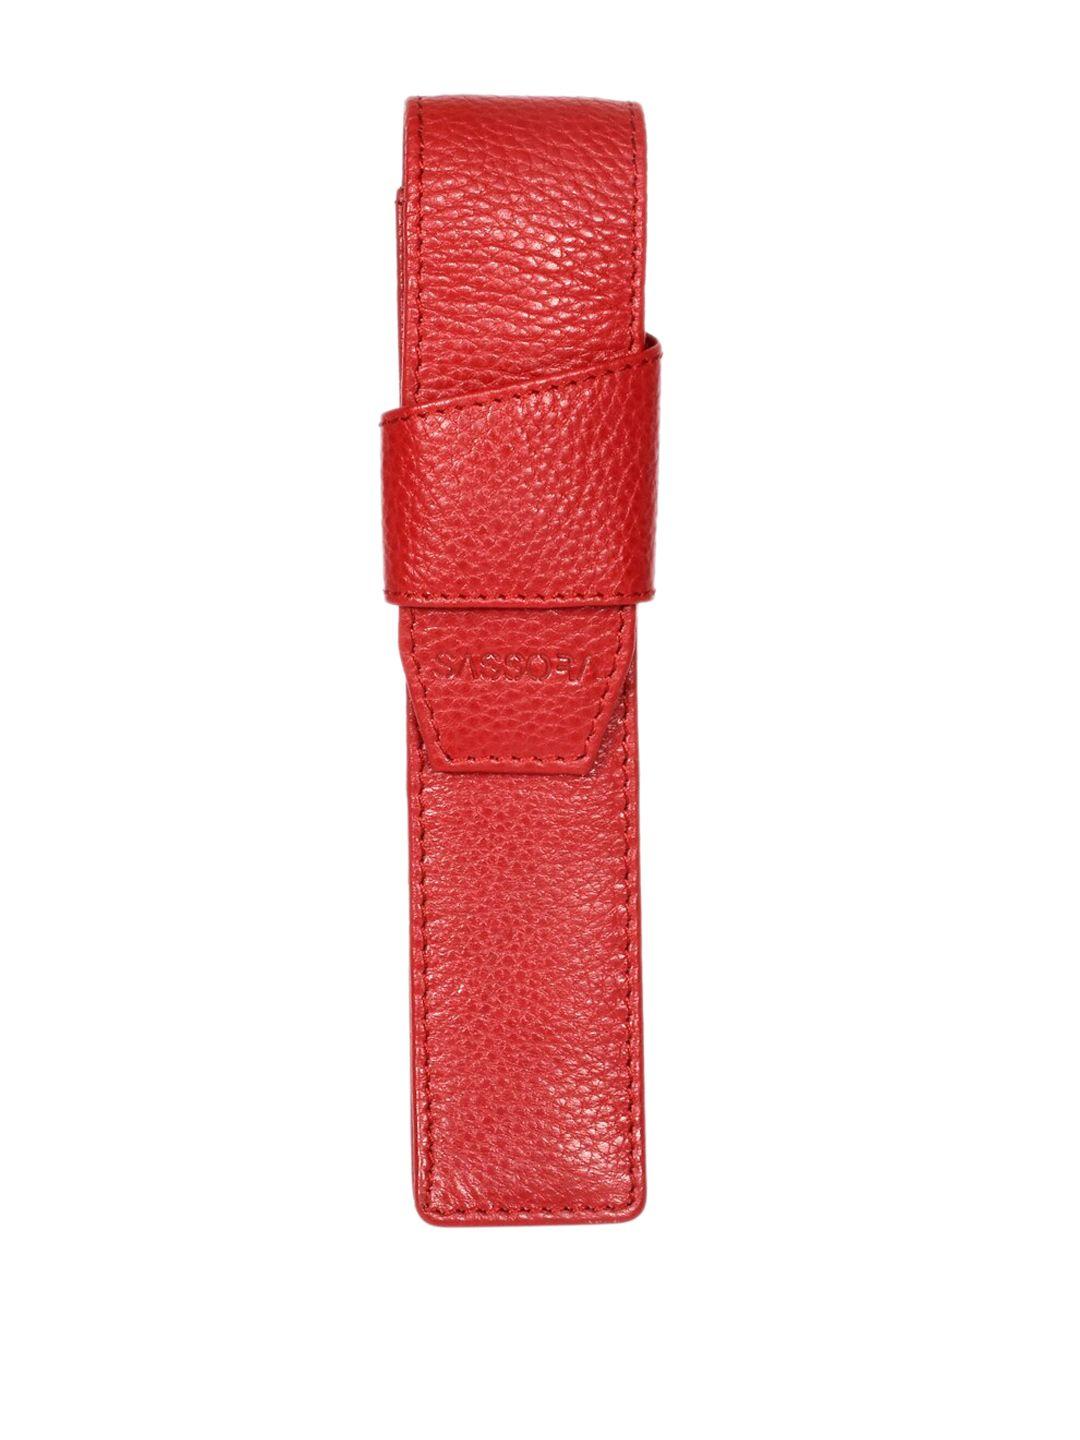 sassora textured genuine leather pencase